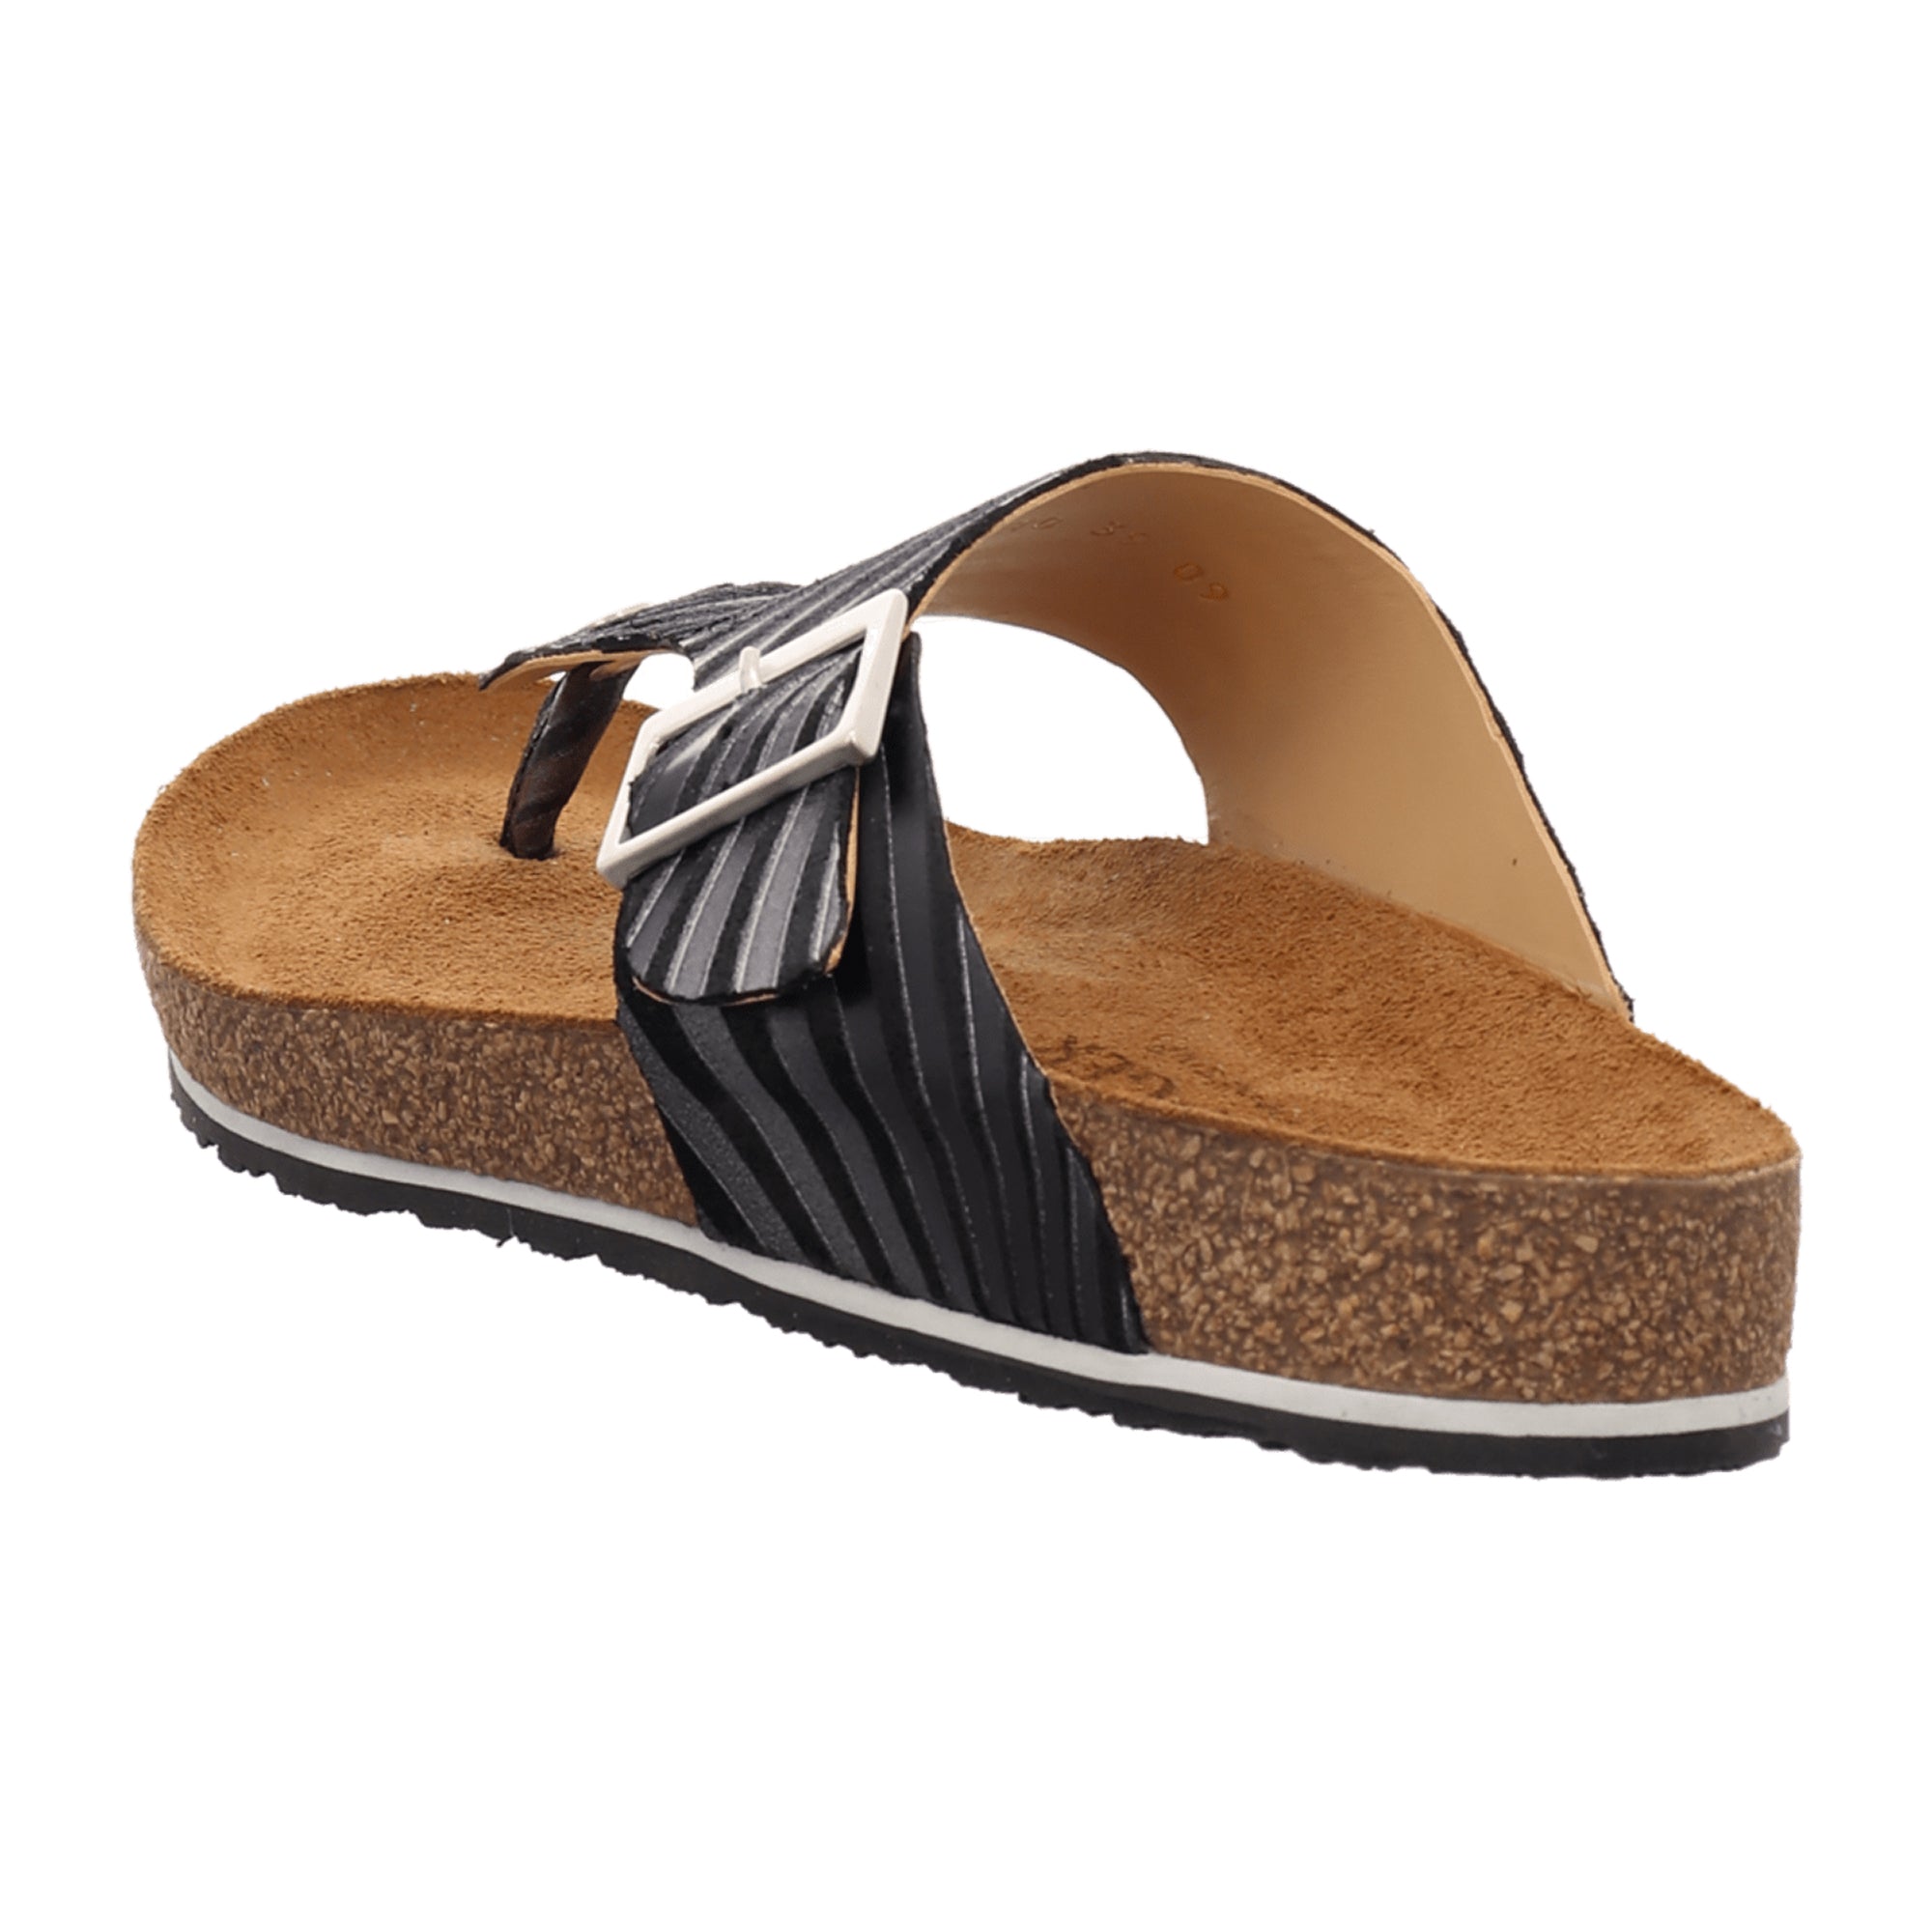 Haflinger Bio Conny Women's Sandals in Black - Eco-Friendly, Stylish & Durable